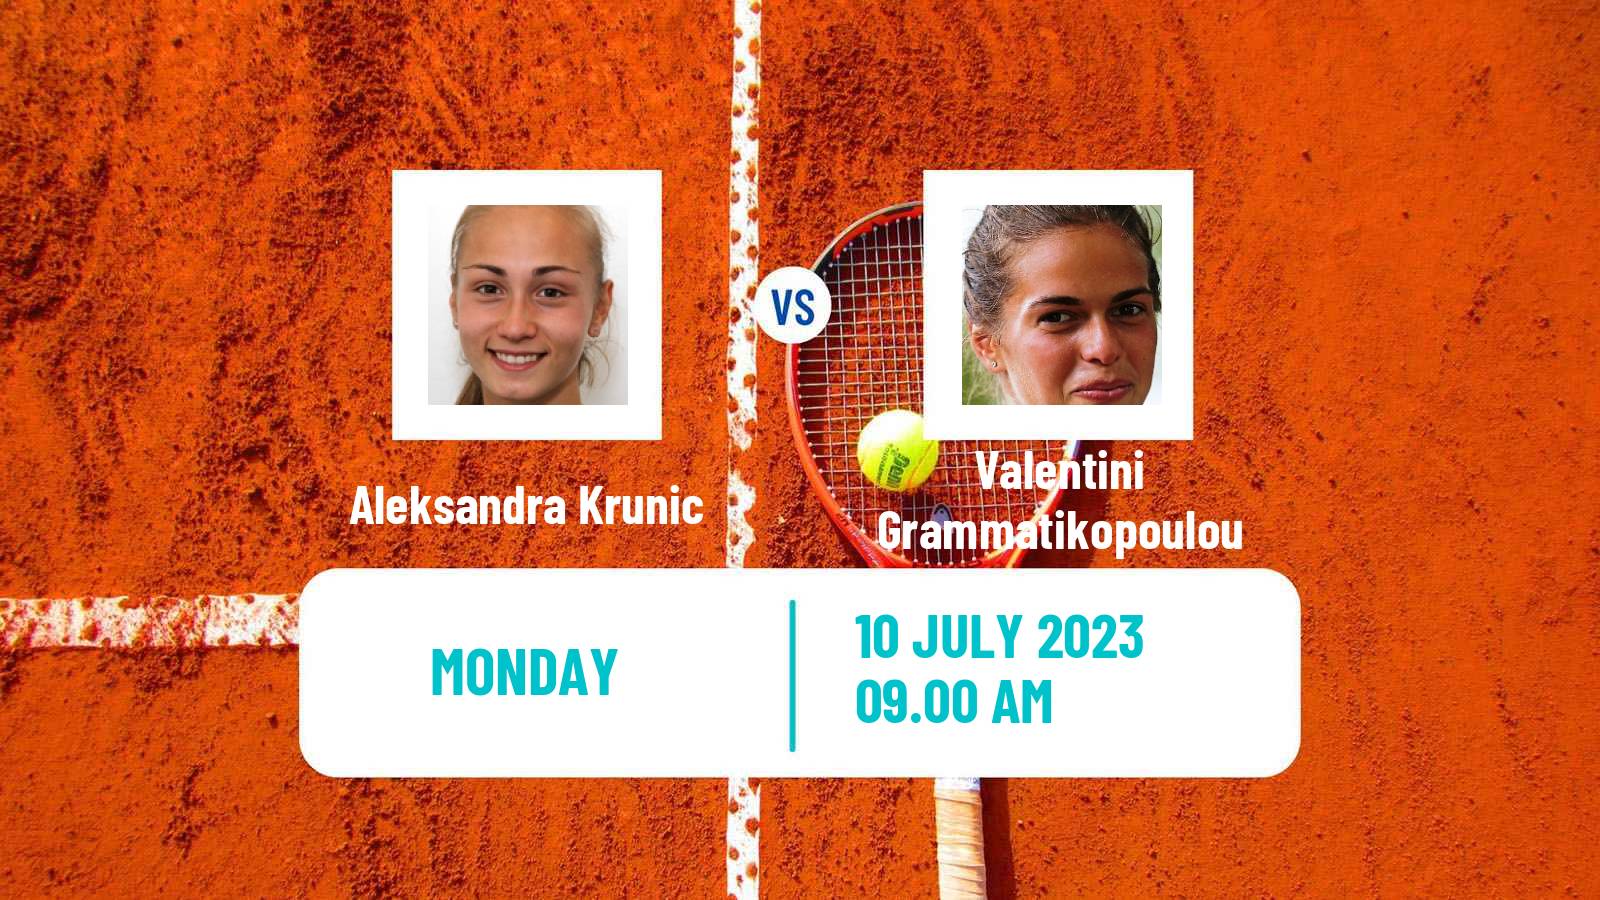 Tennis Contrexeville Challenger Women Aleksandra Krunic - Valentini Grammatikopoulou